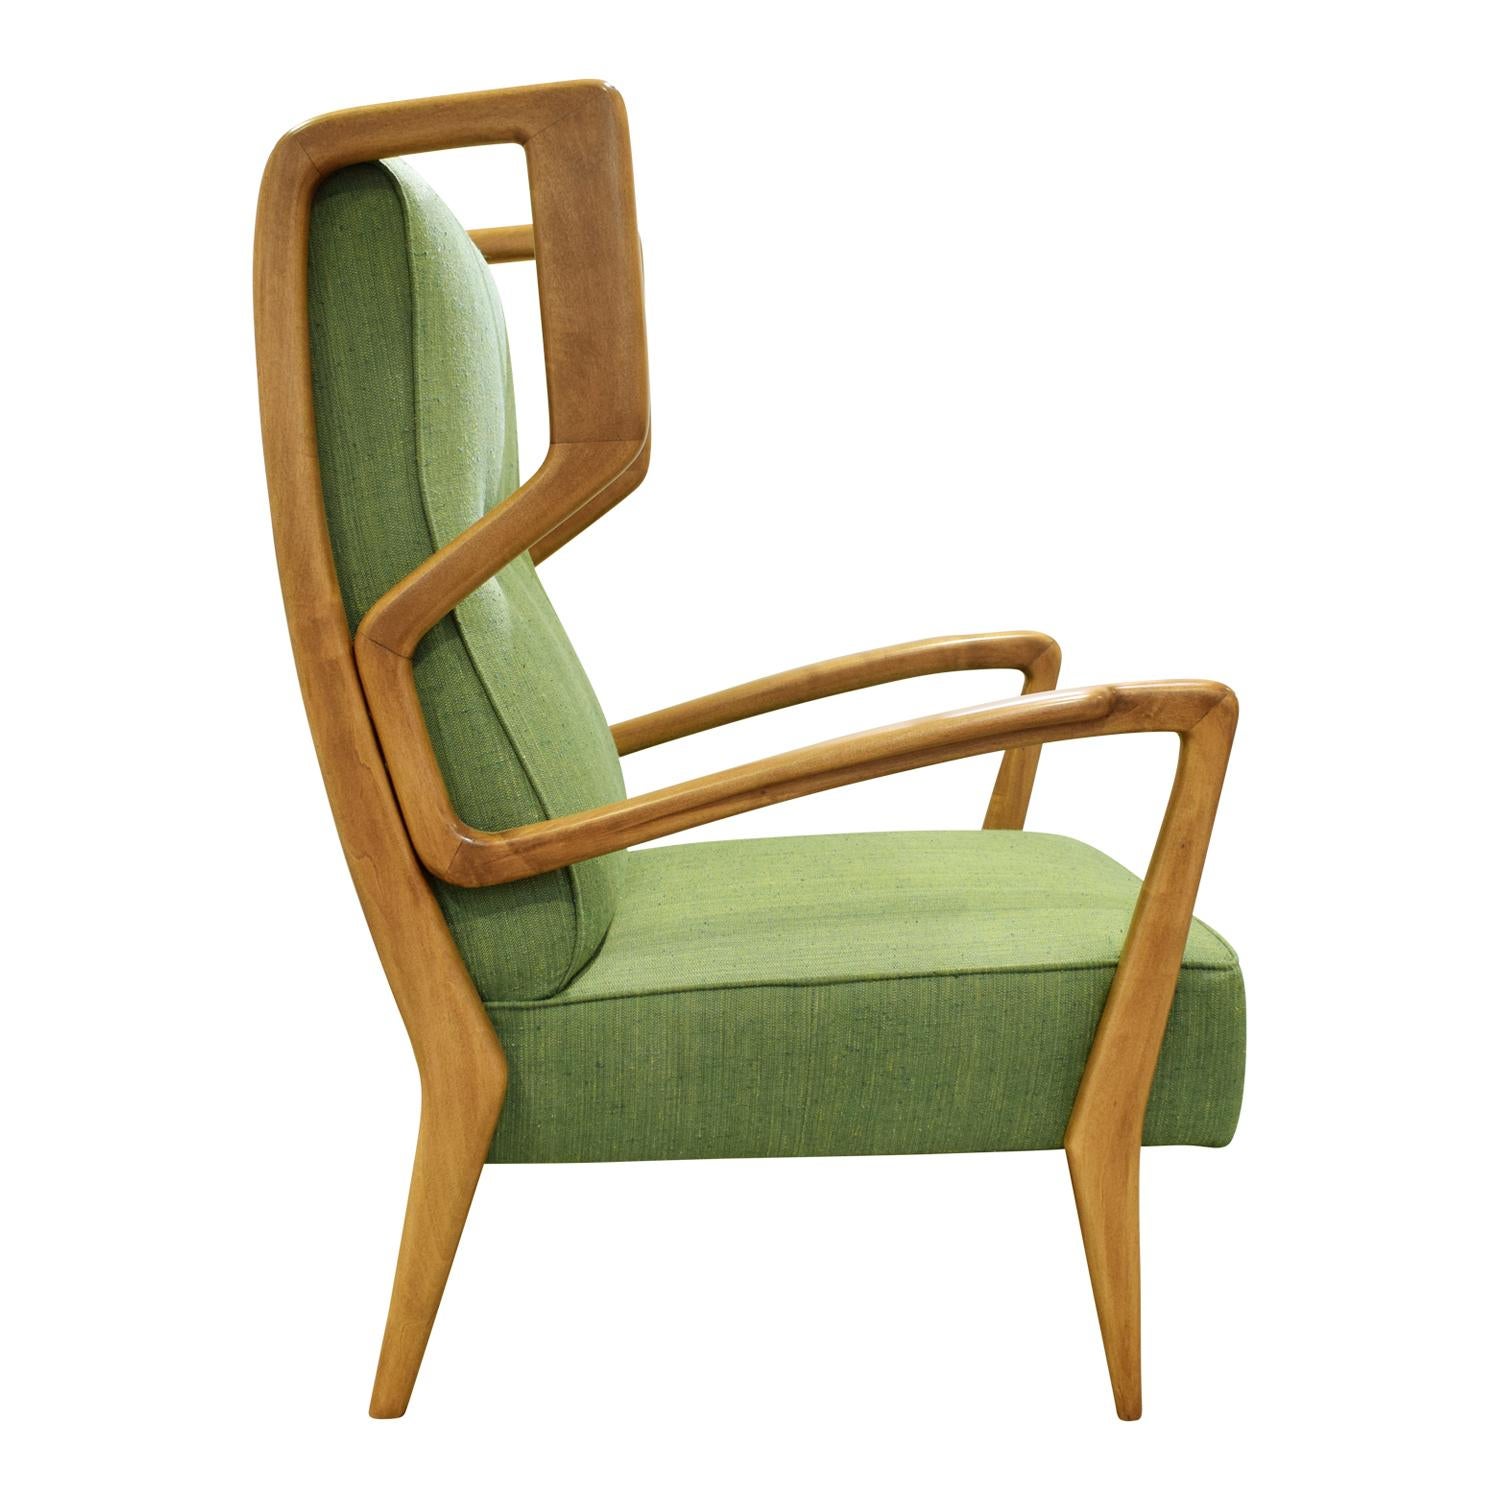 Italian Orlando Orlandi Attributed Pair of High Back Lounge Chairs, 1950s